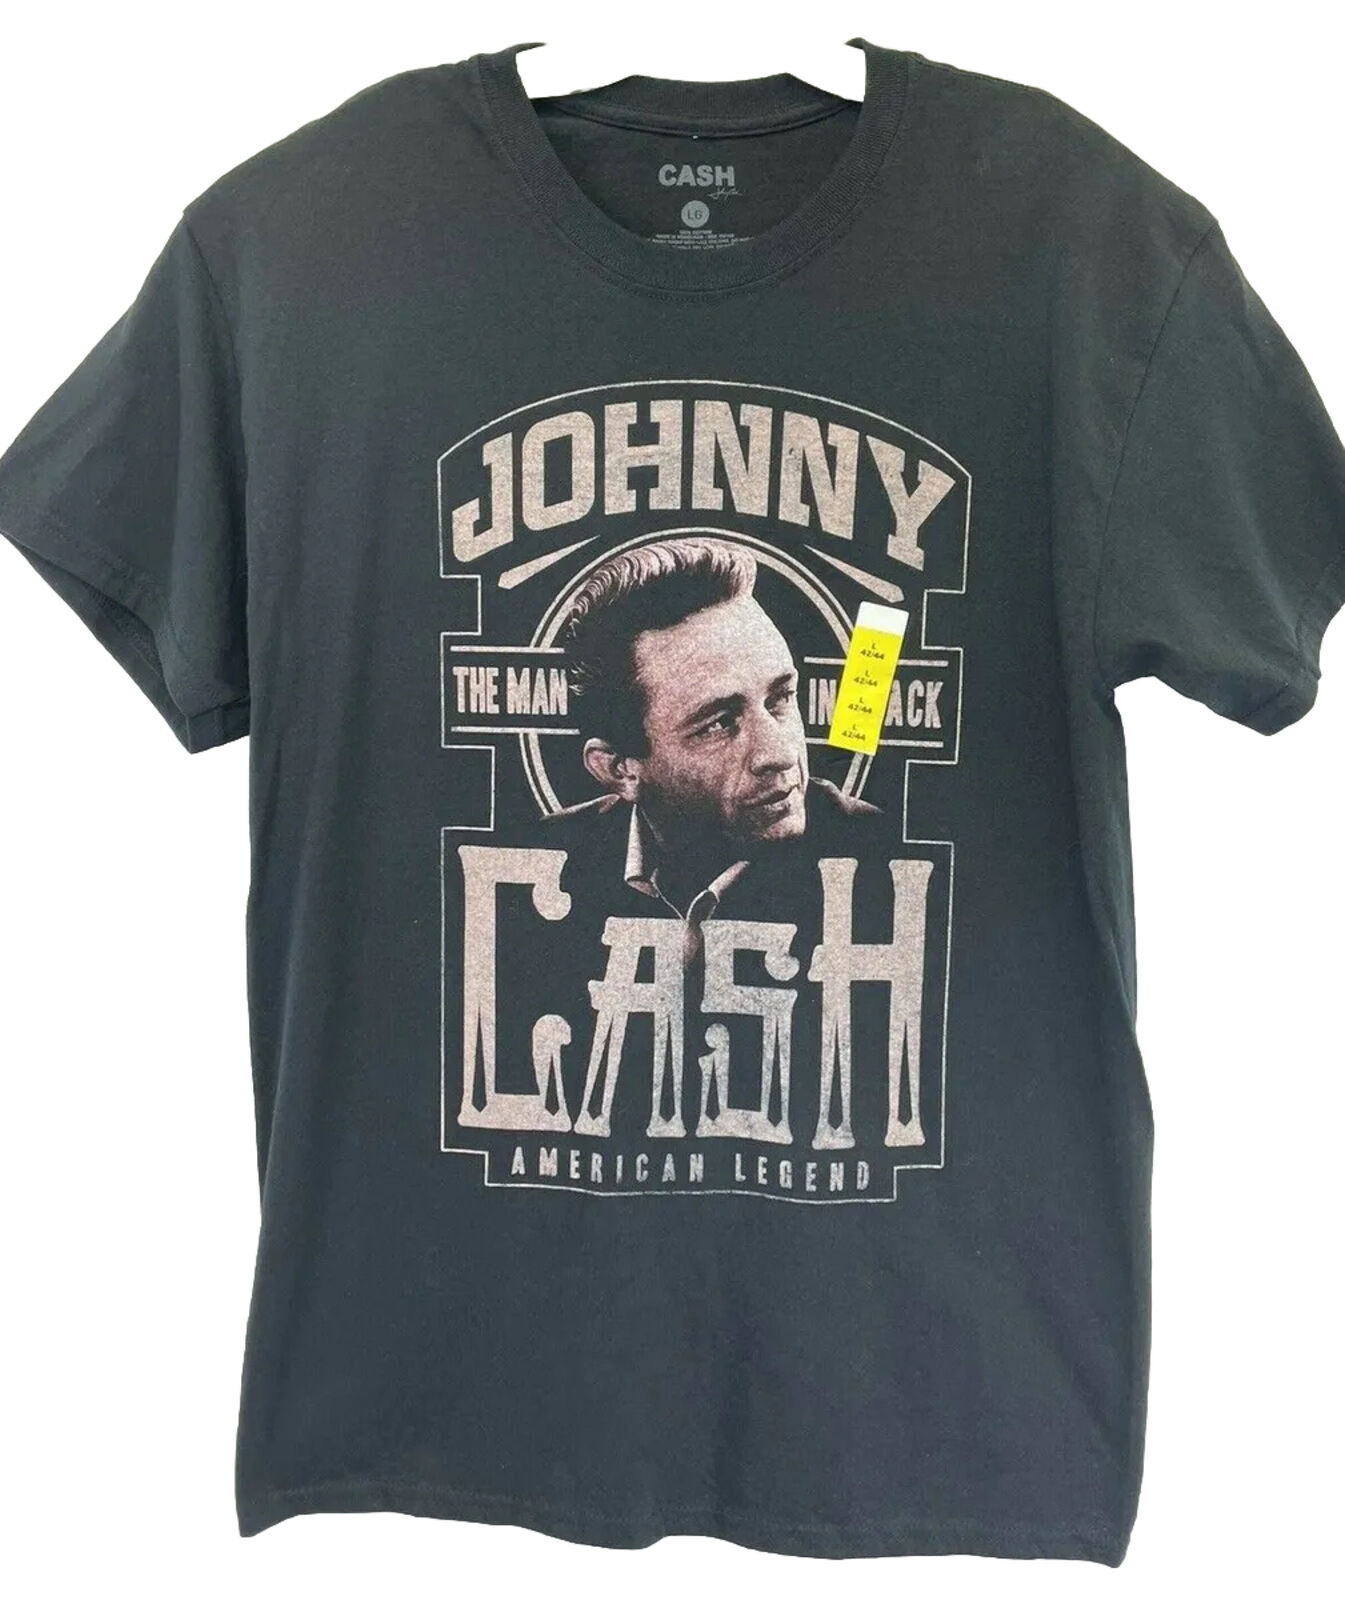 Johnny Cash American Legend Sz Large Black Tee Shirt